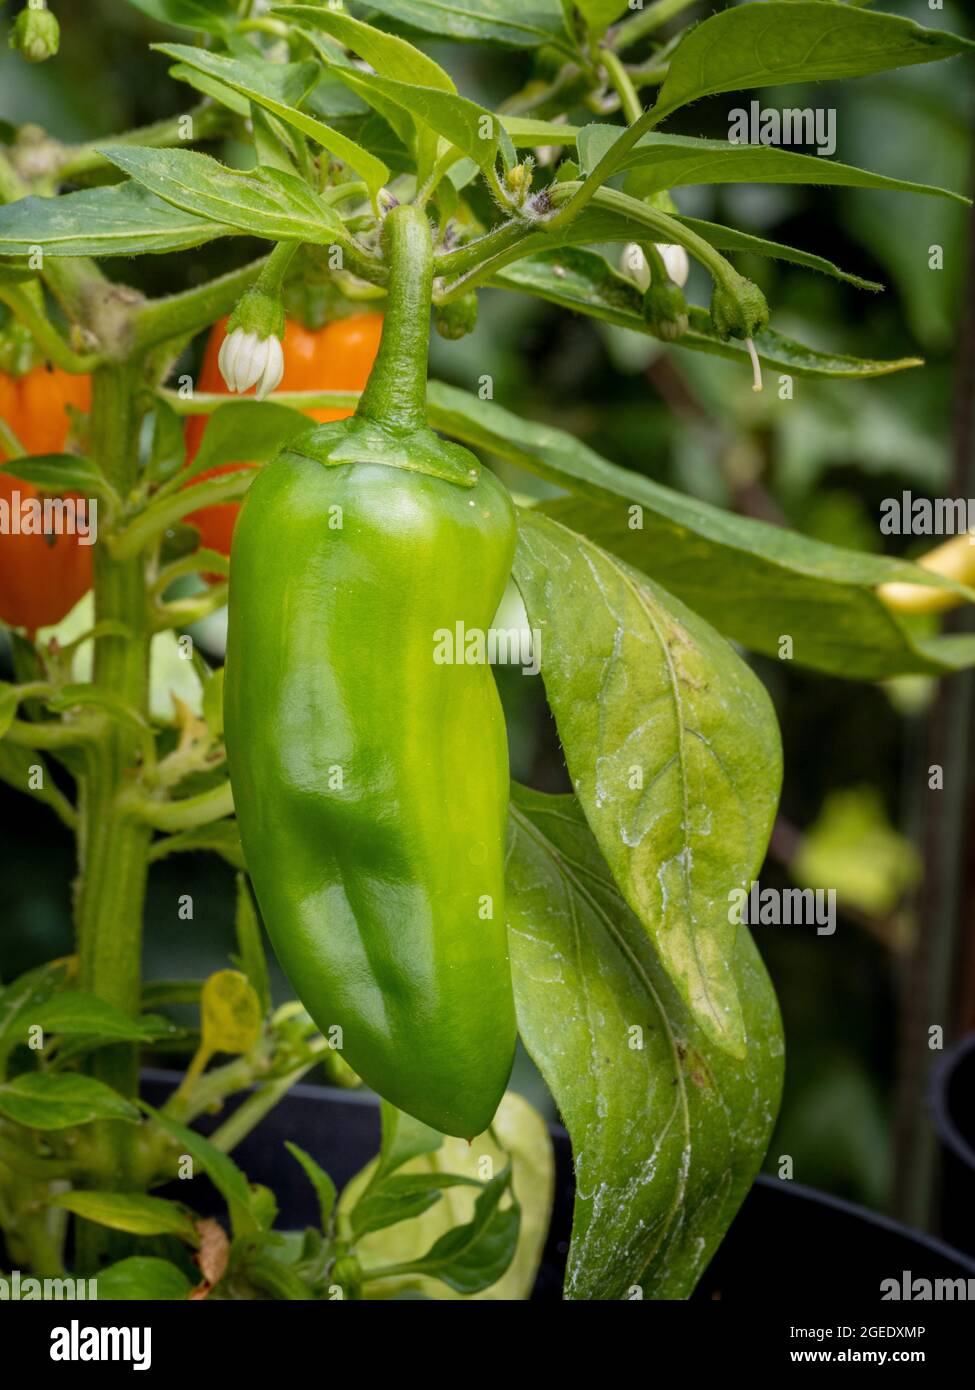 A green fruit of Capsicum Orange Spice. A hot chilli pepper that turns orange when ripe. Stock Photo